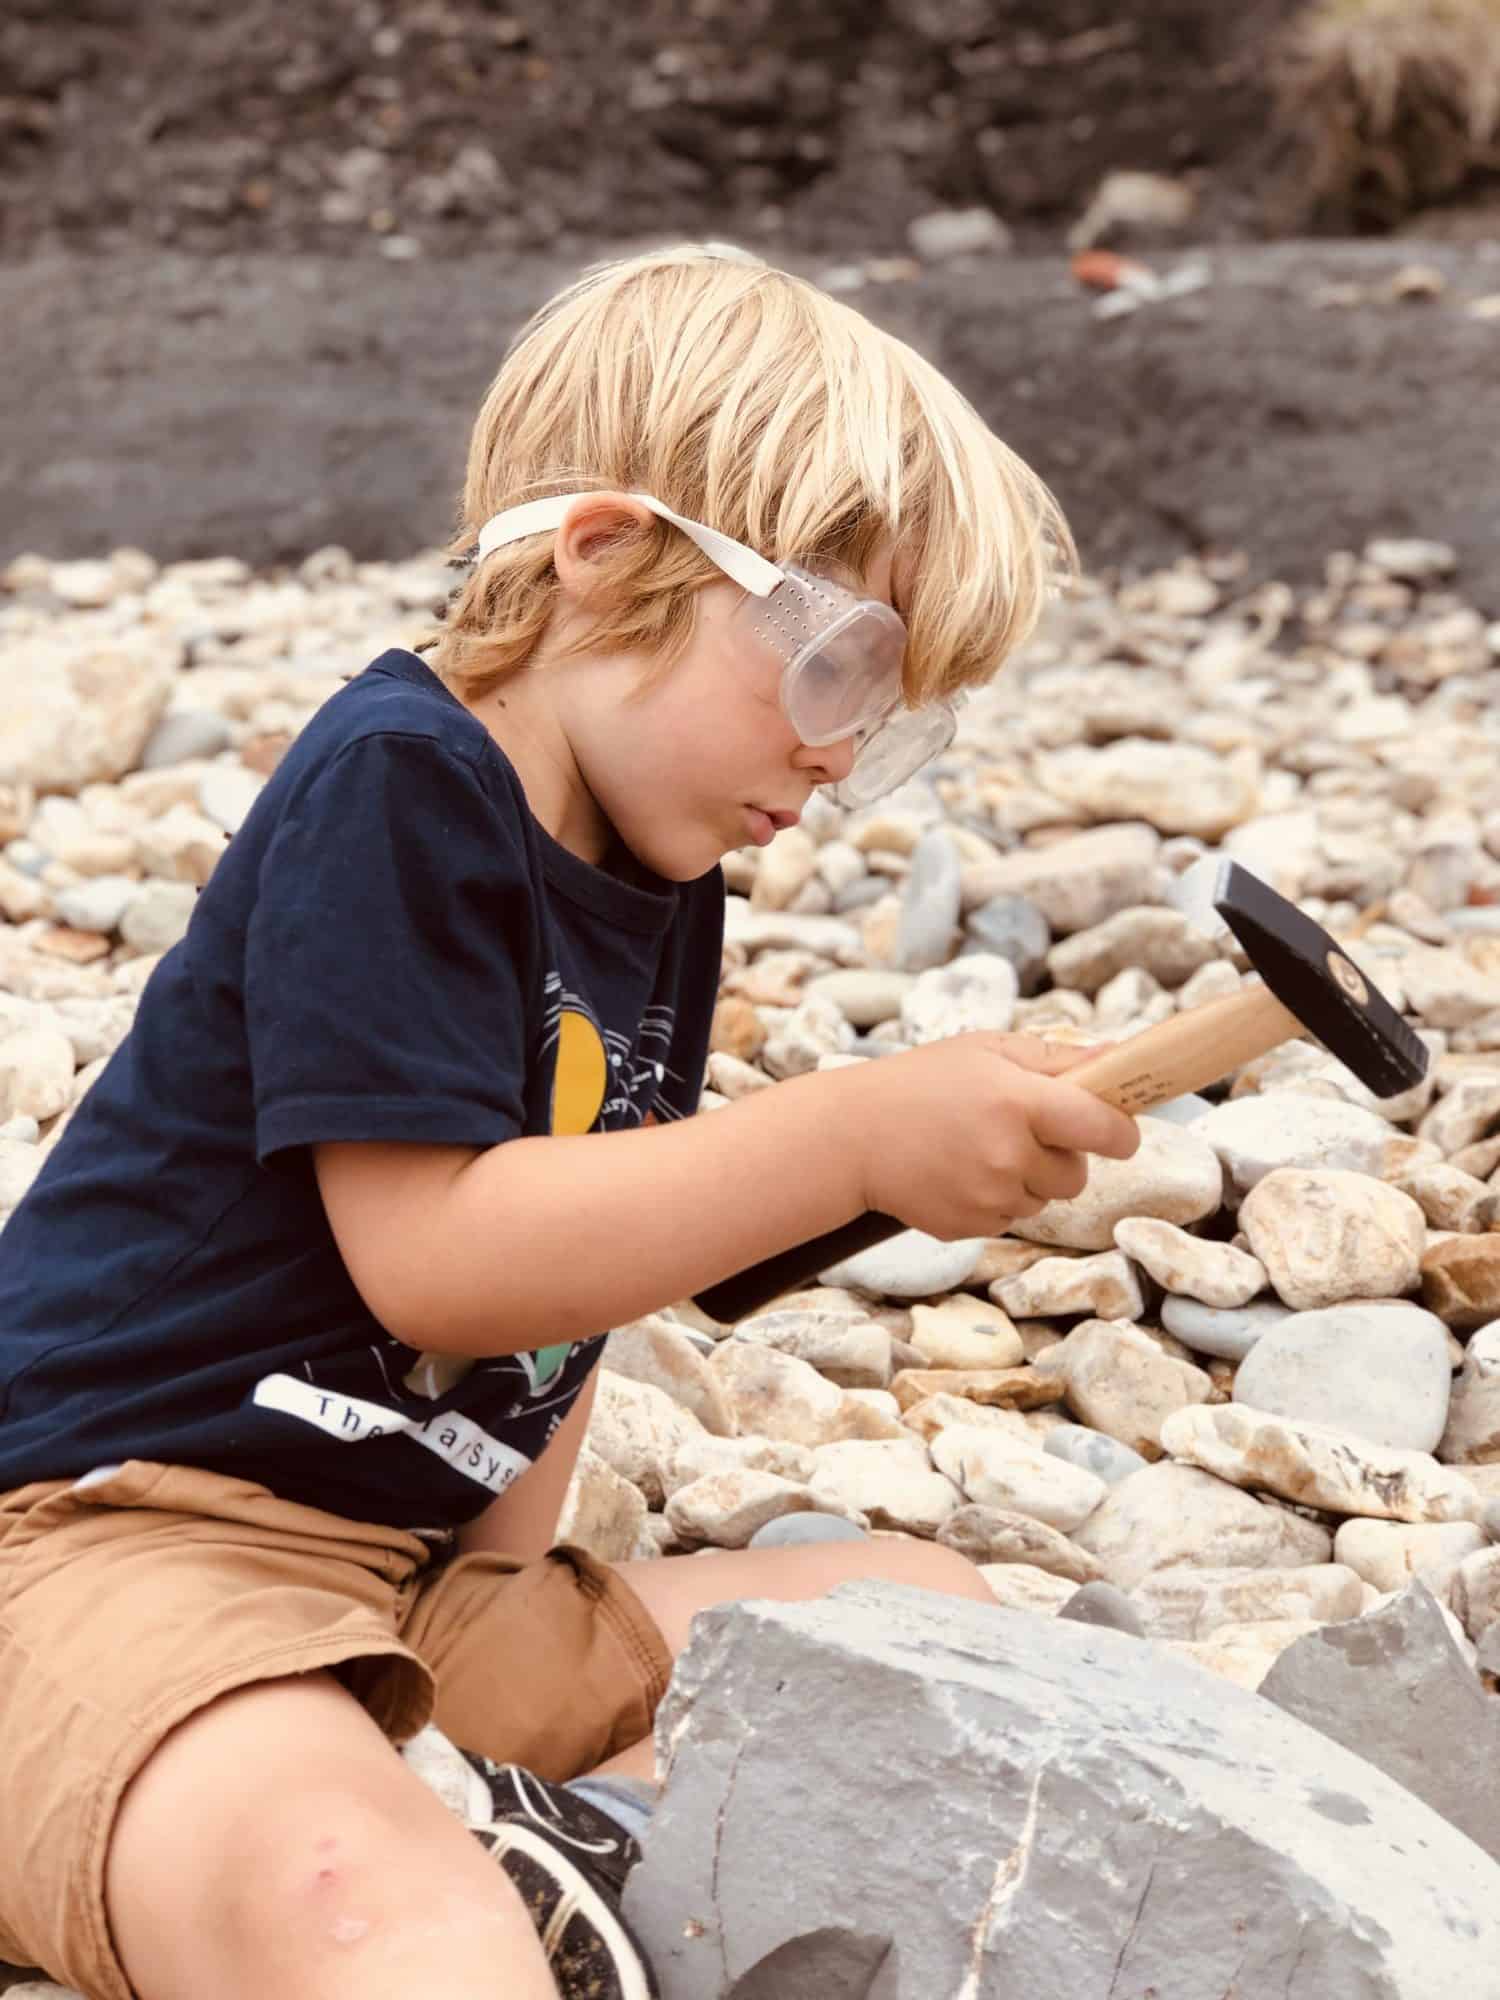 Hammers make fossil hunting super fun